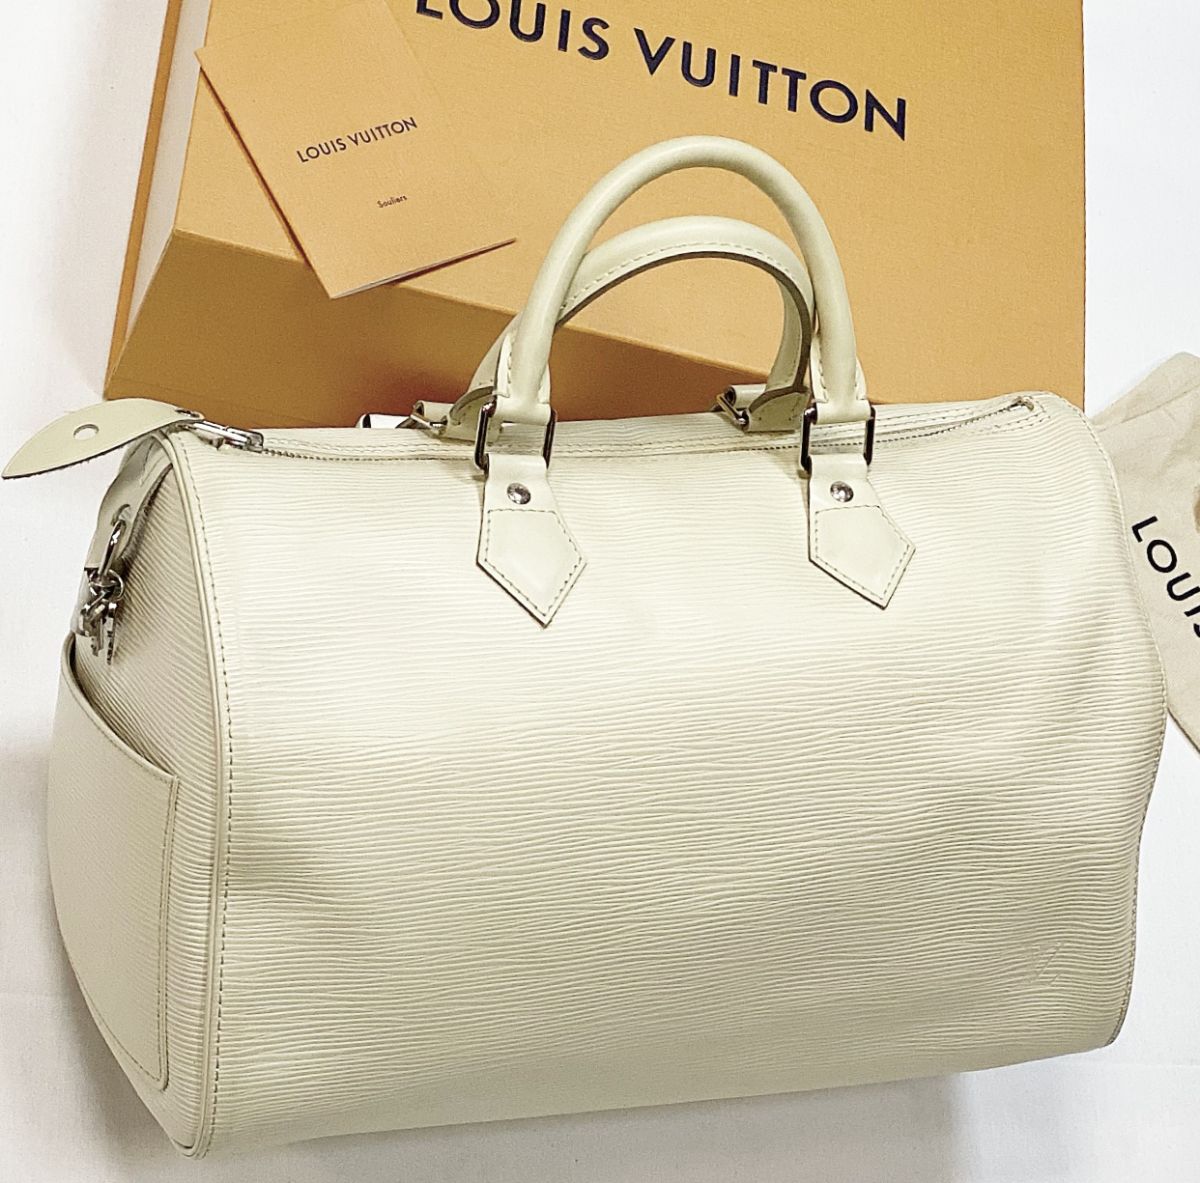 Сумка Louis Vuitton размер 35/25 цена 18 463 руб 